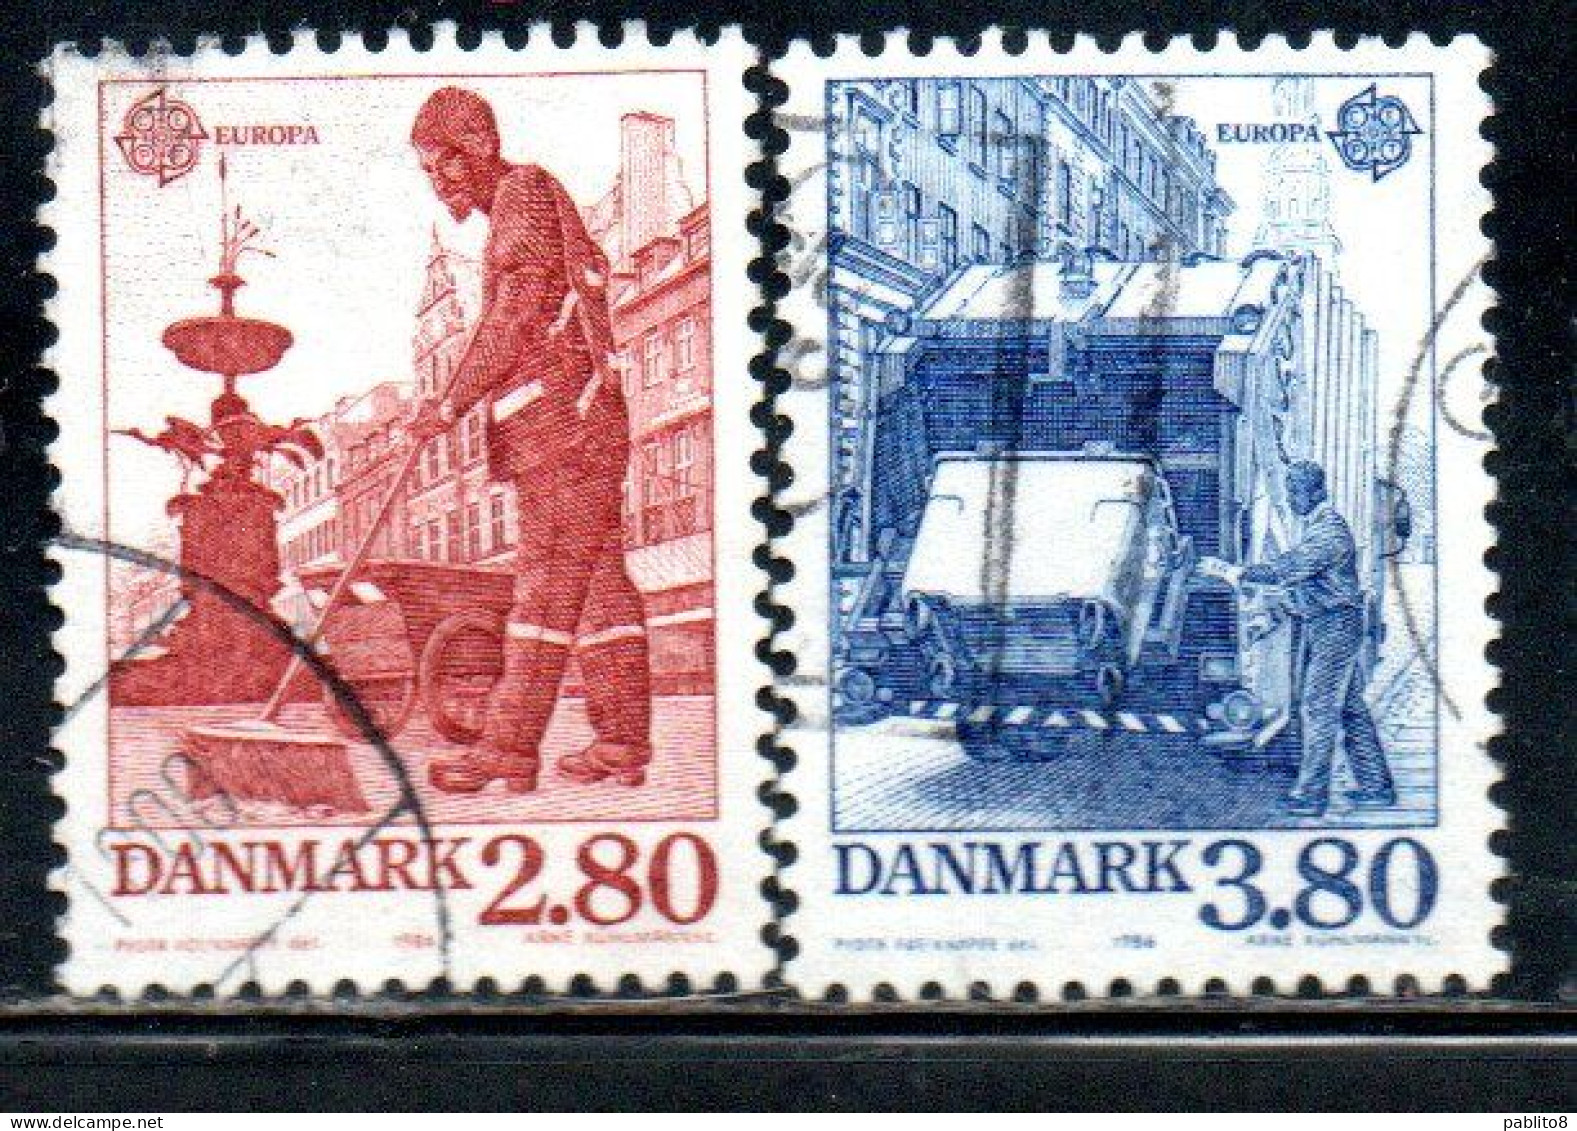 DANEMARK DANMARK DENMARK DANIMARCA 1986 EUROPA CEPT COMPLETE SET SERIE COMPLETA USED USATO OBLITERE' - Oblitérés